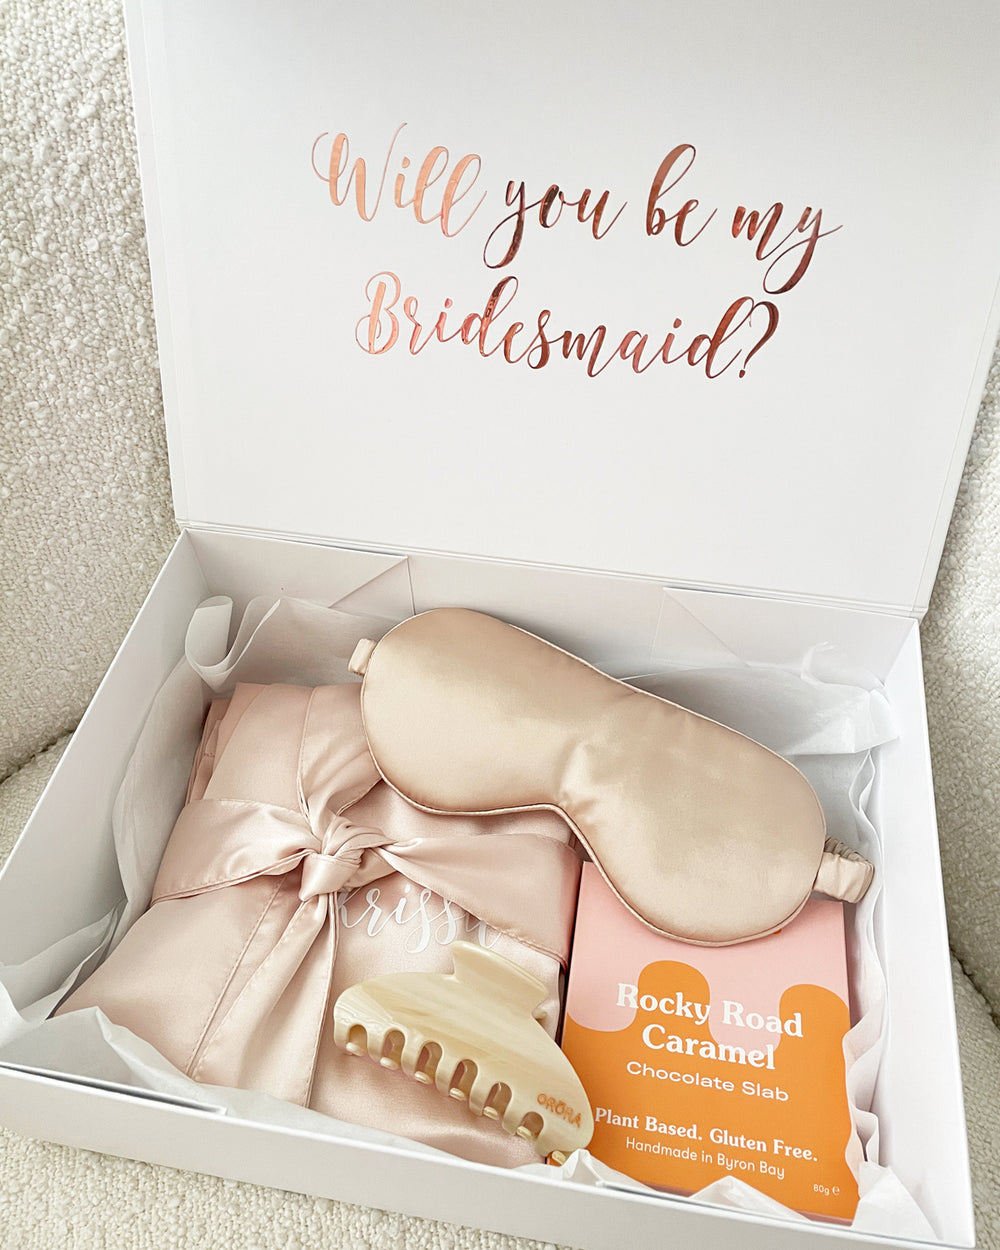 Cloud 9 Bridesmaids Gift Box - Vorfreude Stationery